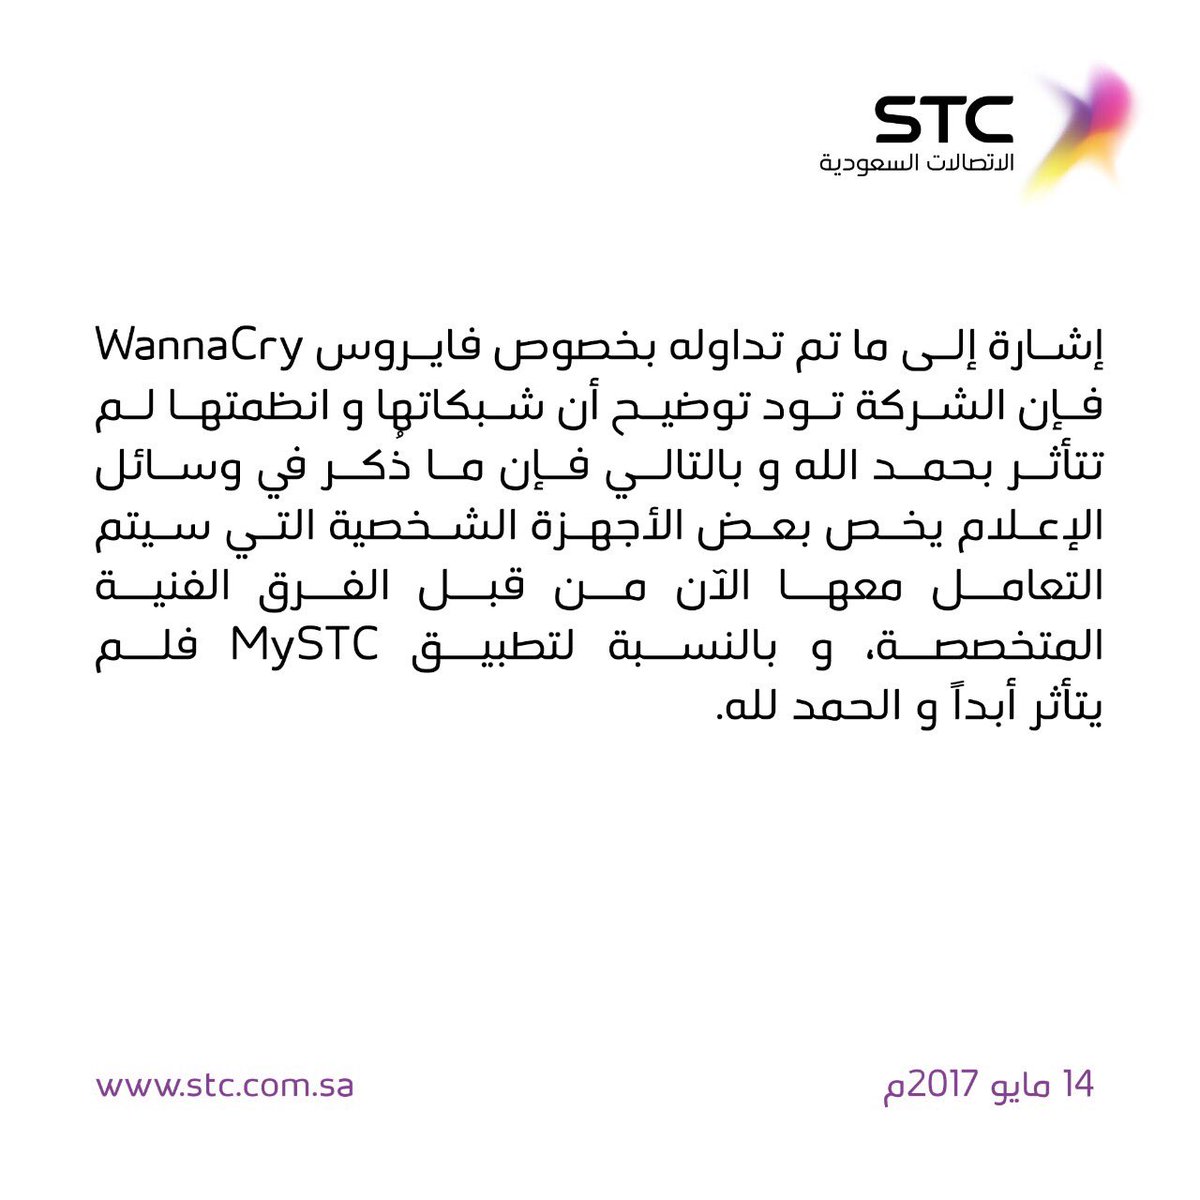 STC : لم نتأثر بفيروس Wanna Cry